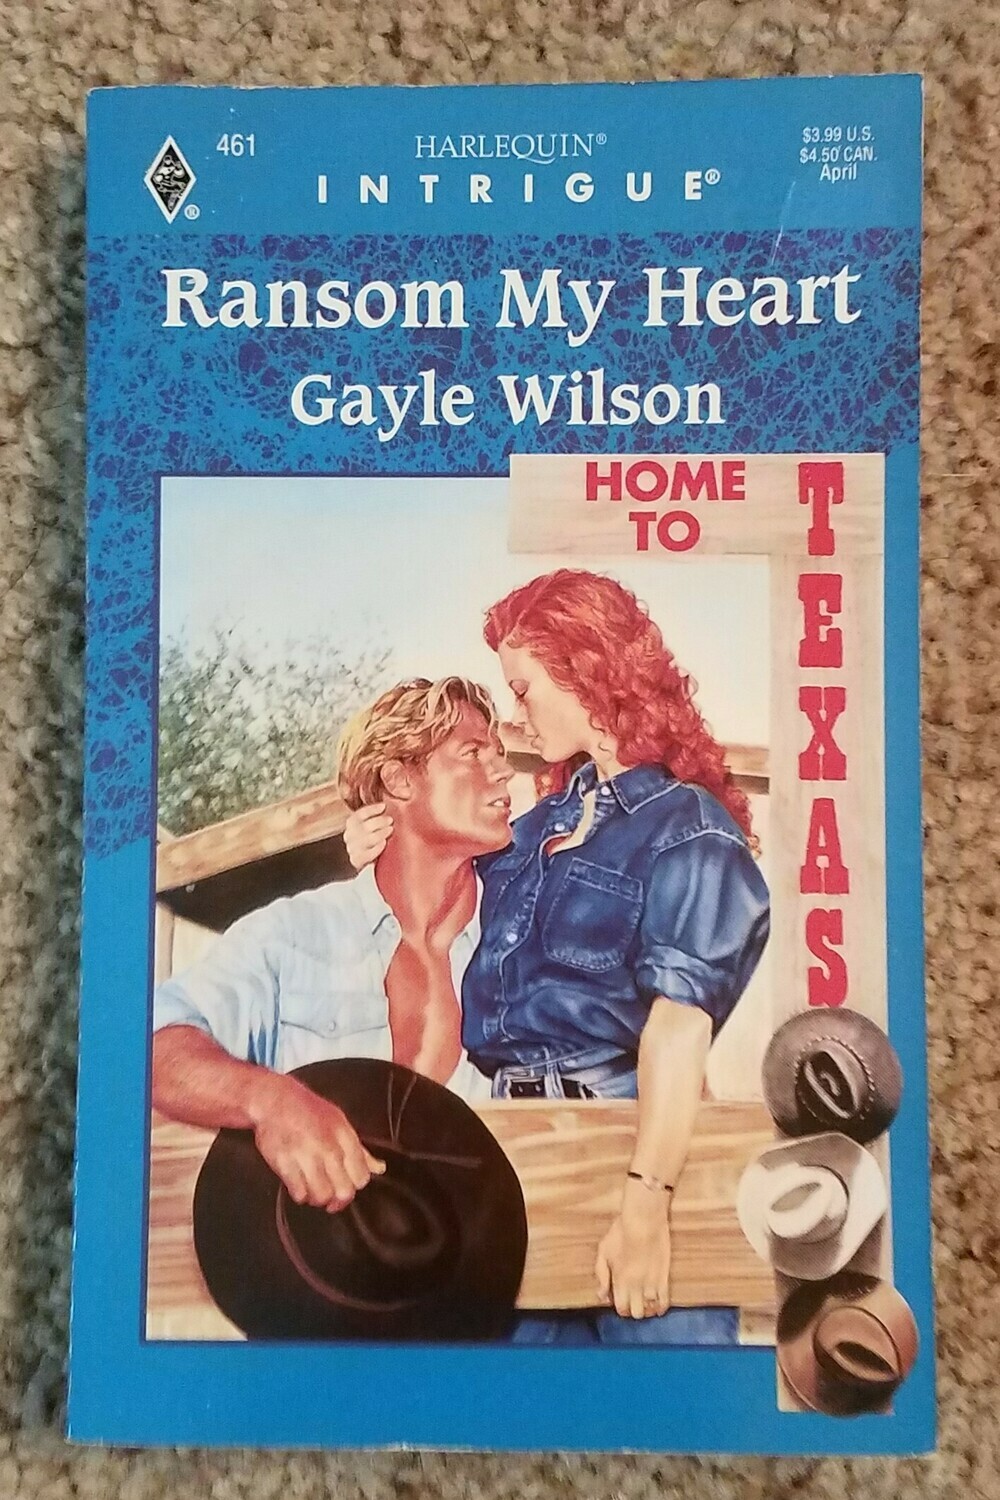 Ransom My Heart by Gayle Wilson